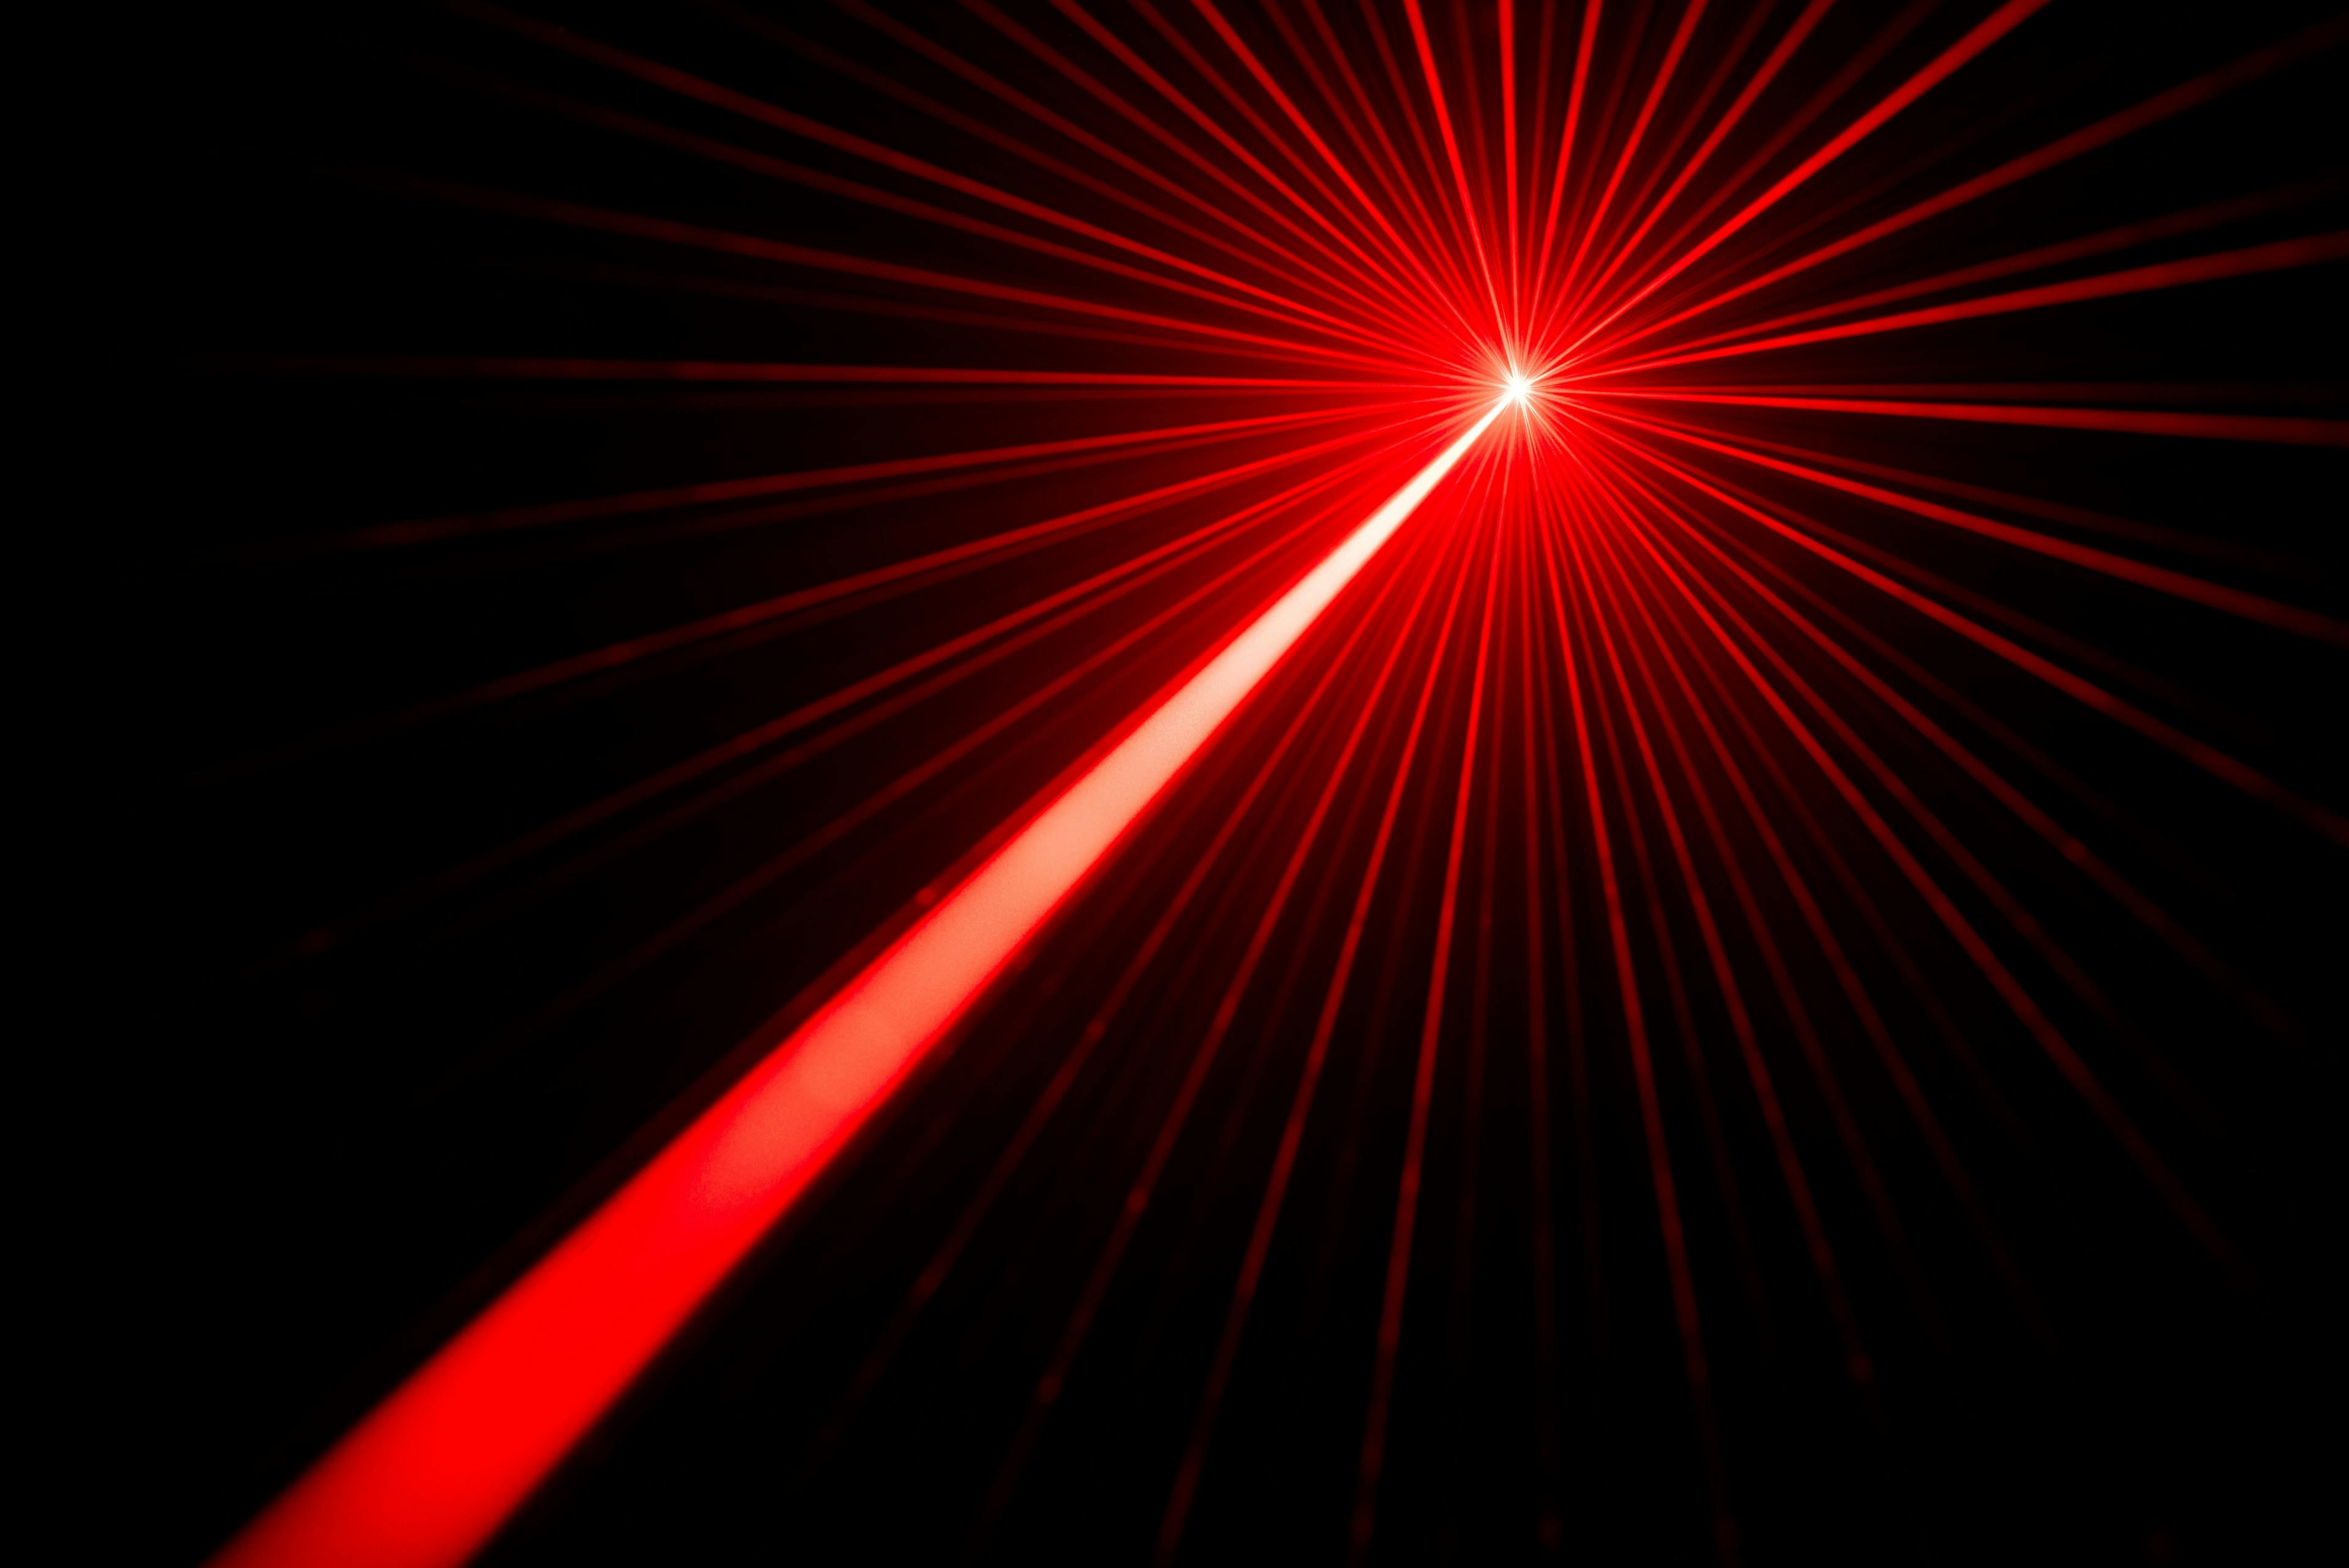 Laser beam light effect | Image Credit: © donatas1205 - stock.adobe.com